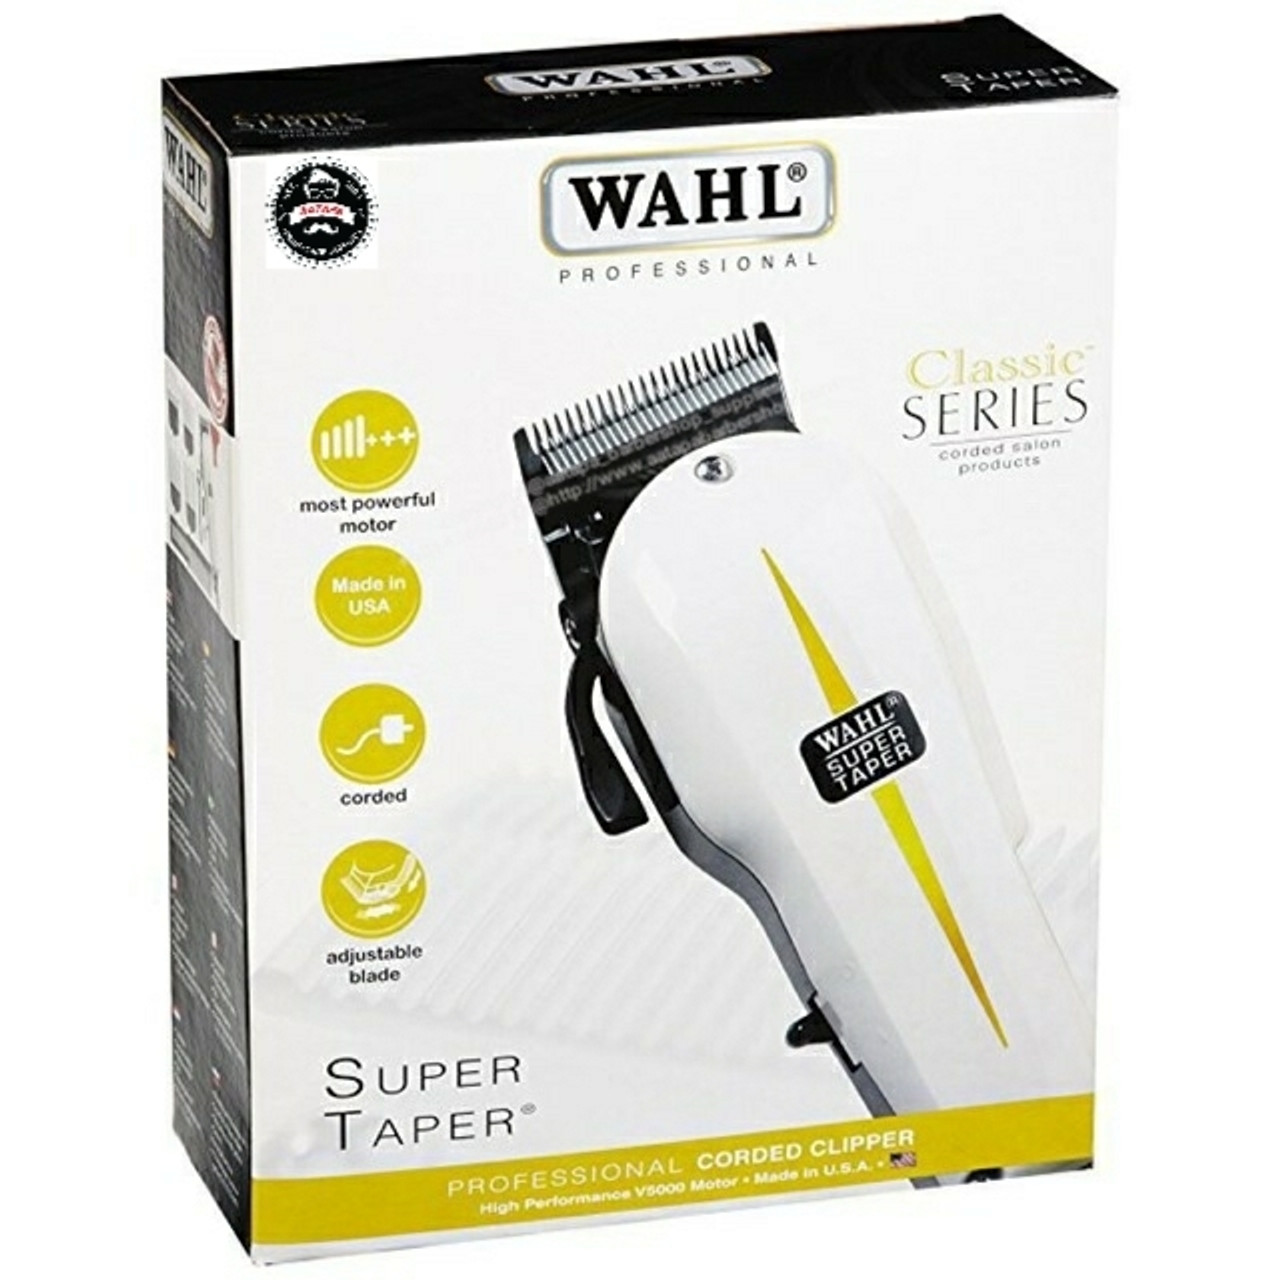 wahl classic series super taper corded clipper usa made 29667.1619778460